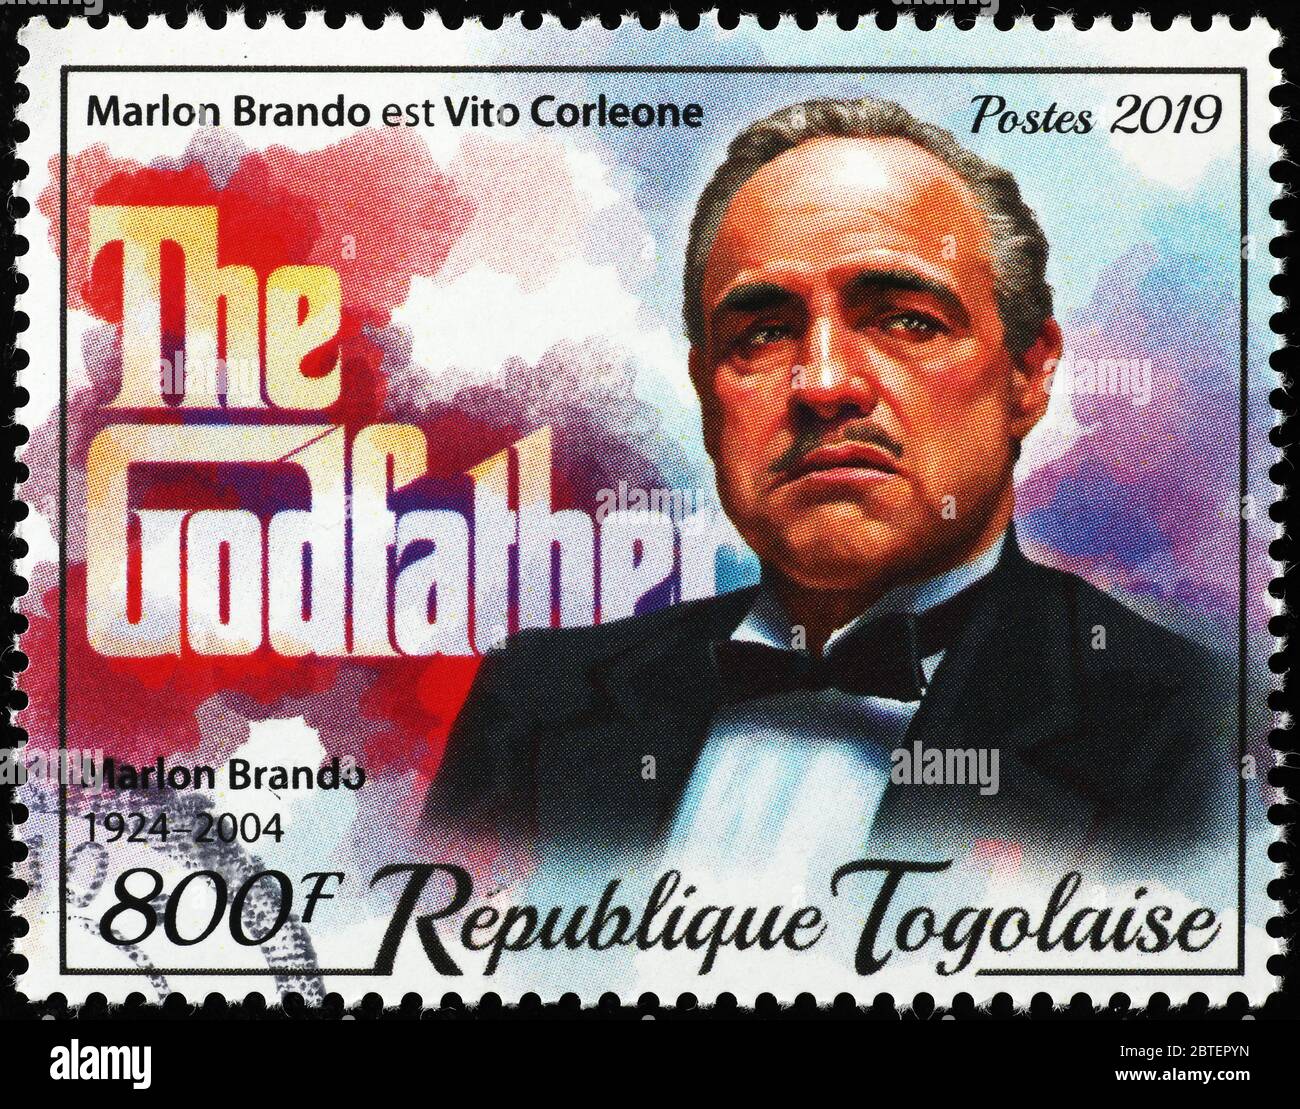 Marlon Brando in The Godfather on postage stamp Stock Photo